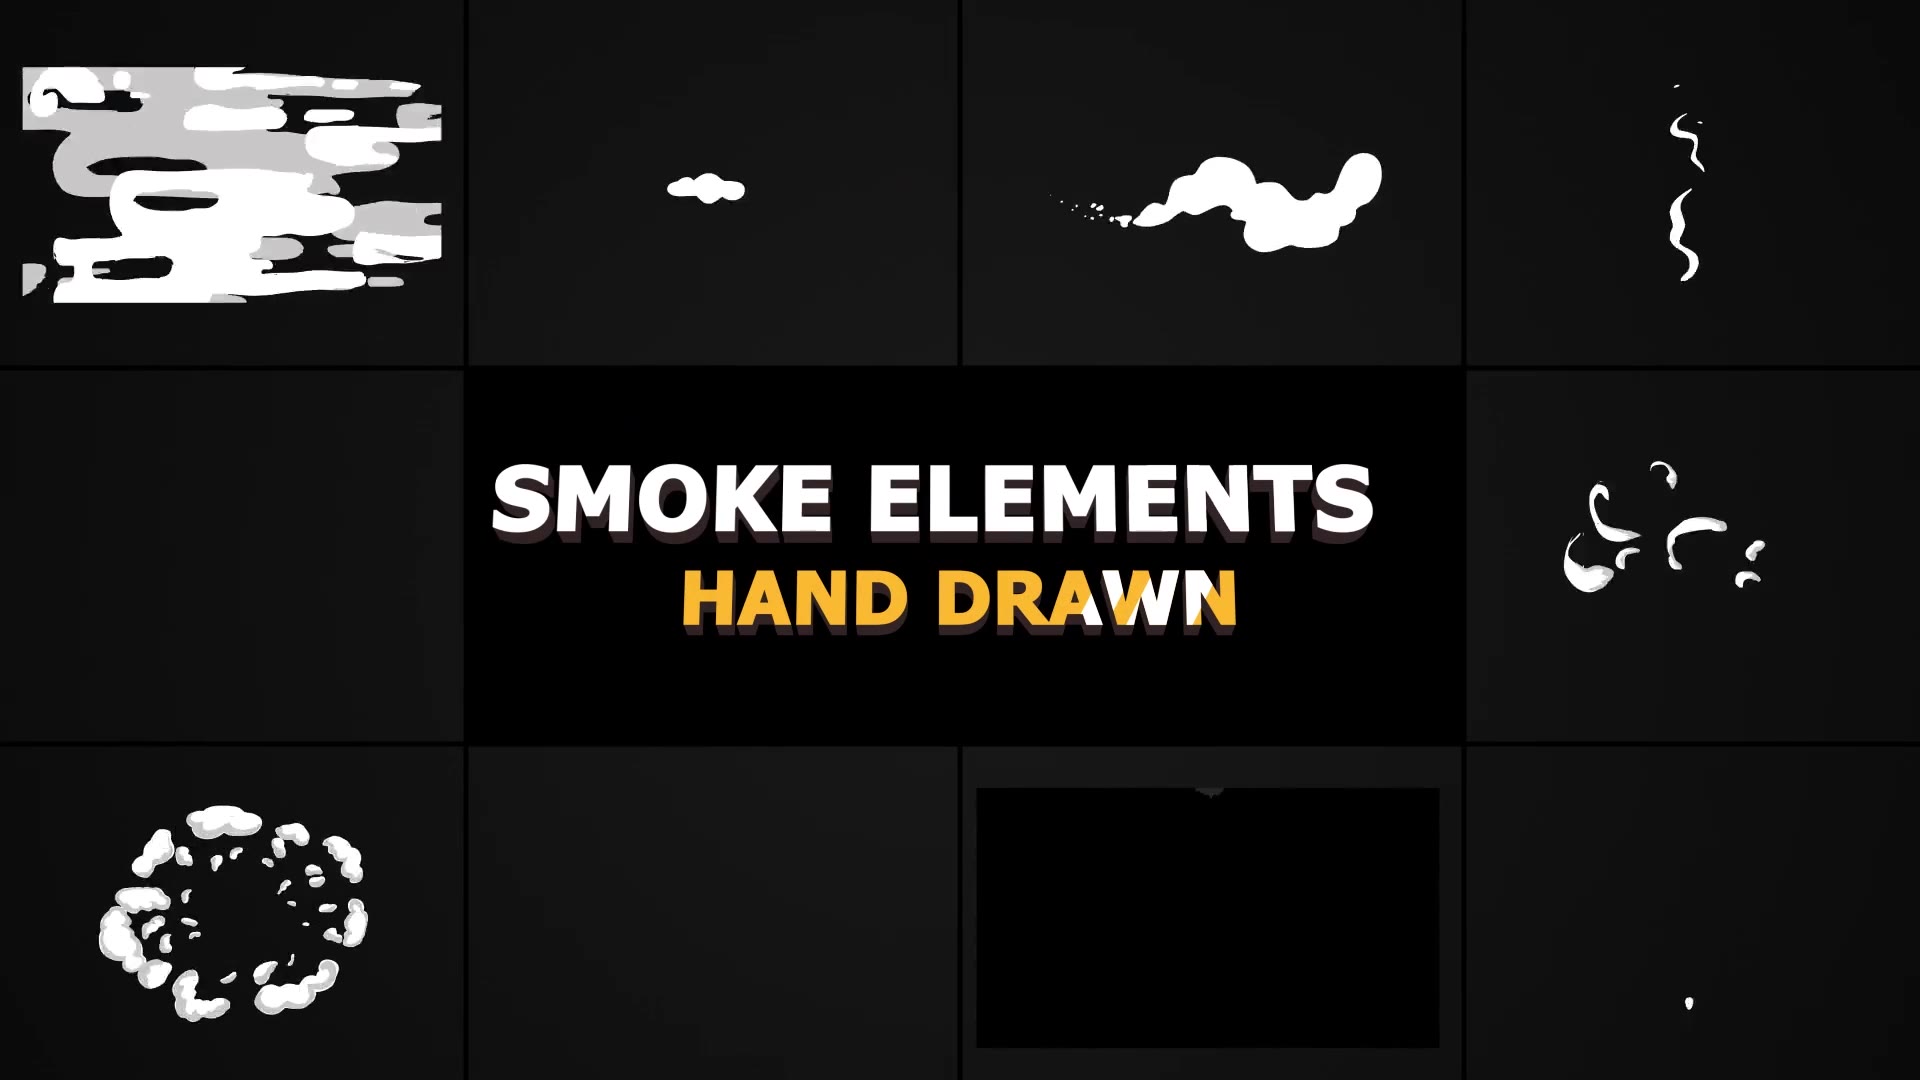 Dynamic Smoke Elements Pack - Download Videohive 23244006